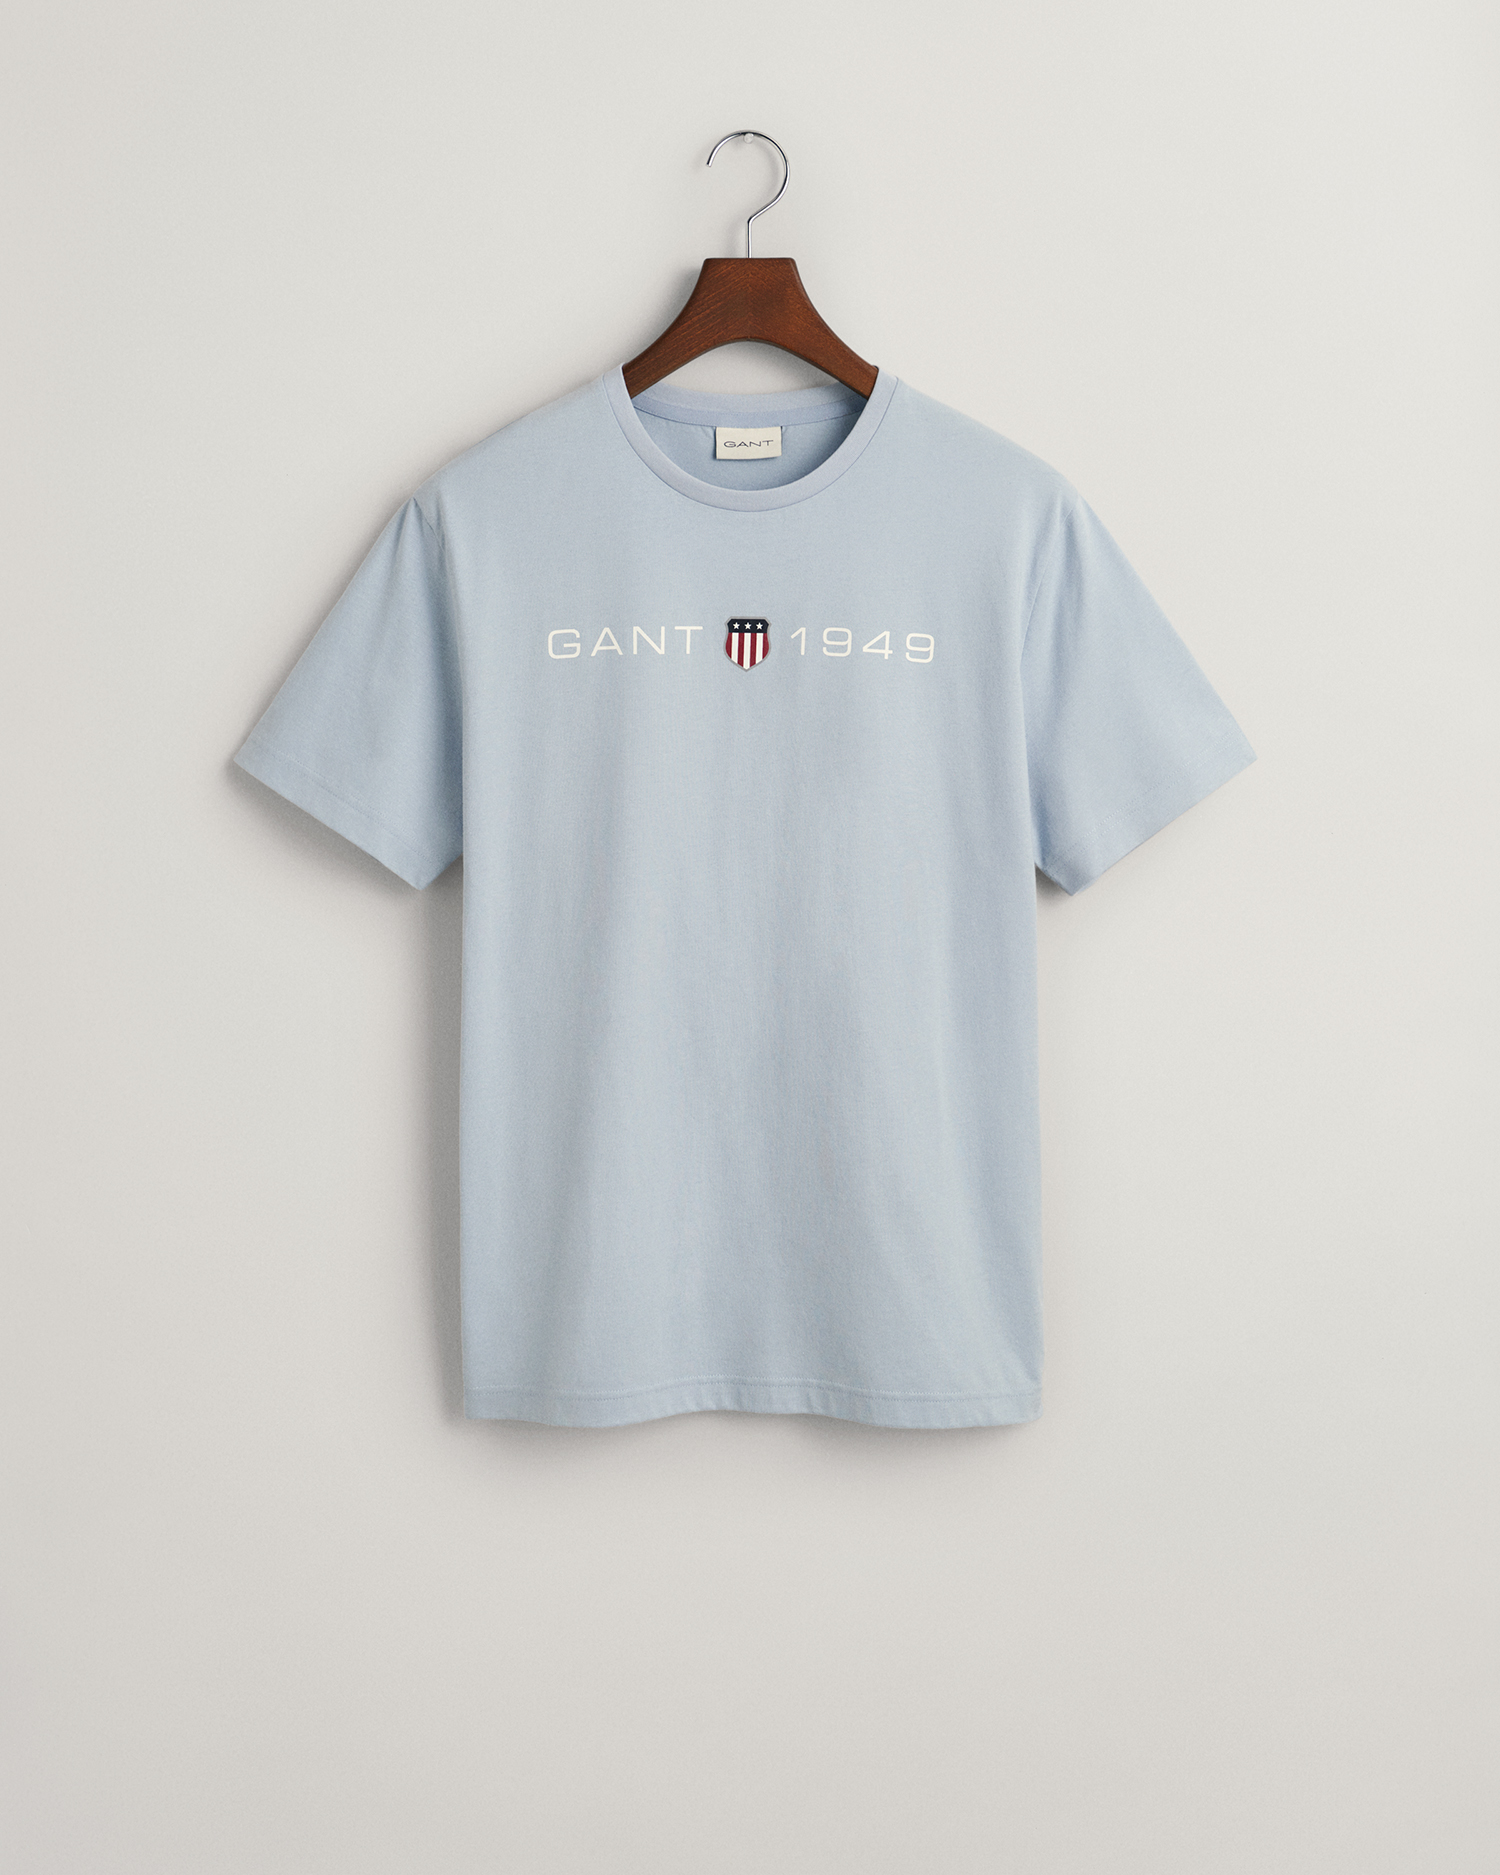 Printed Graphic T-Shirt - GANT